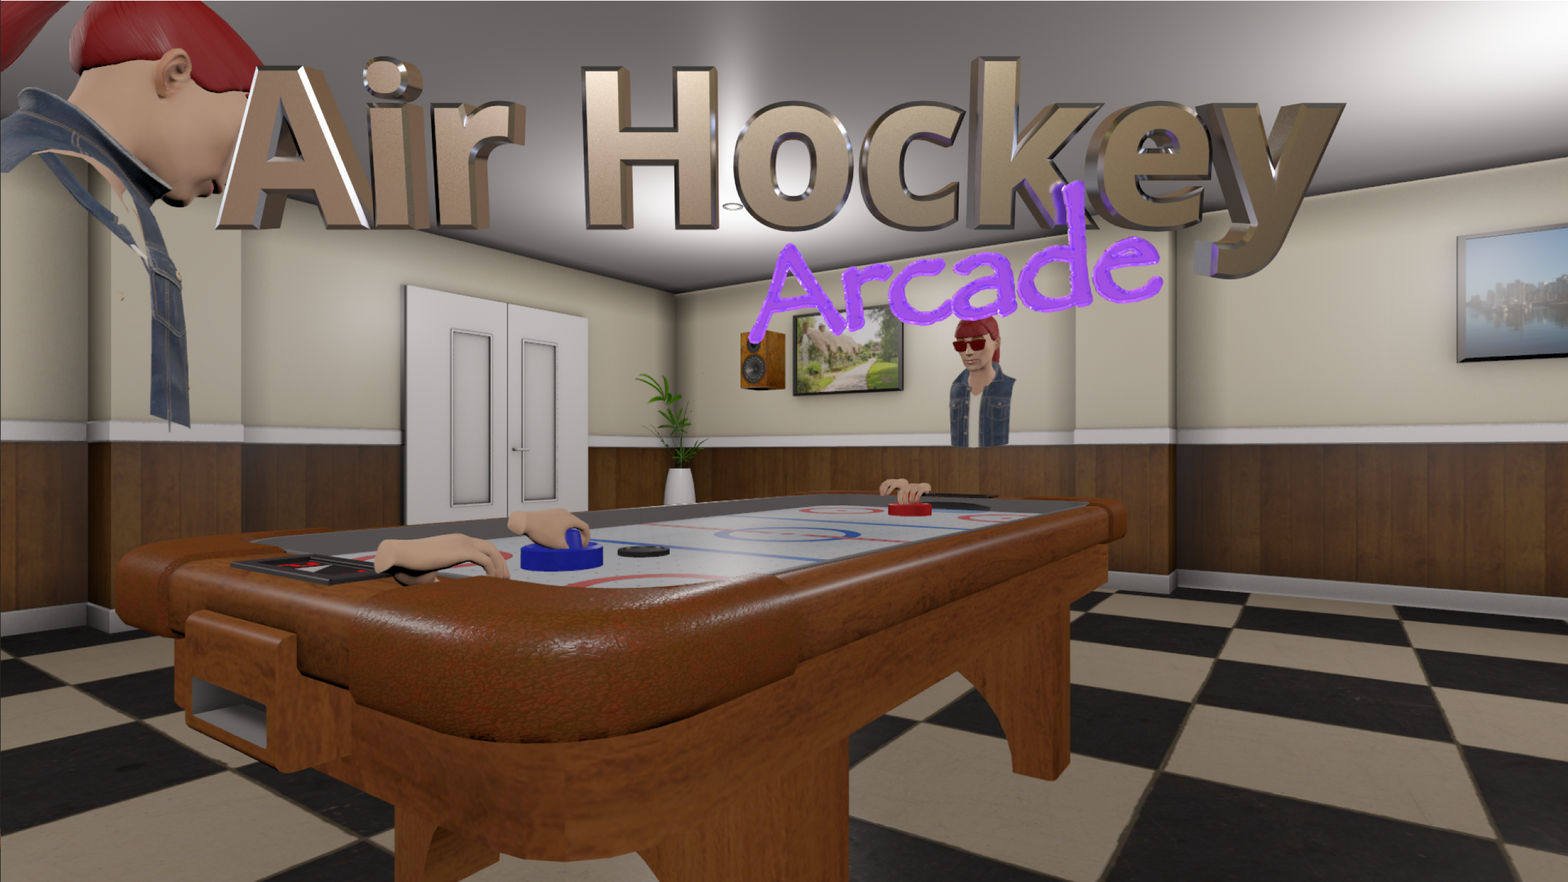 Air Hockey Arcade